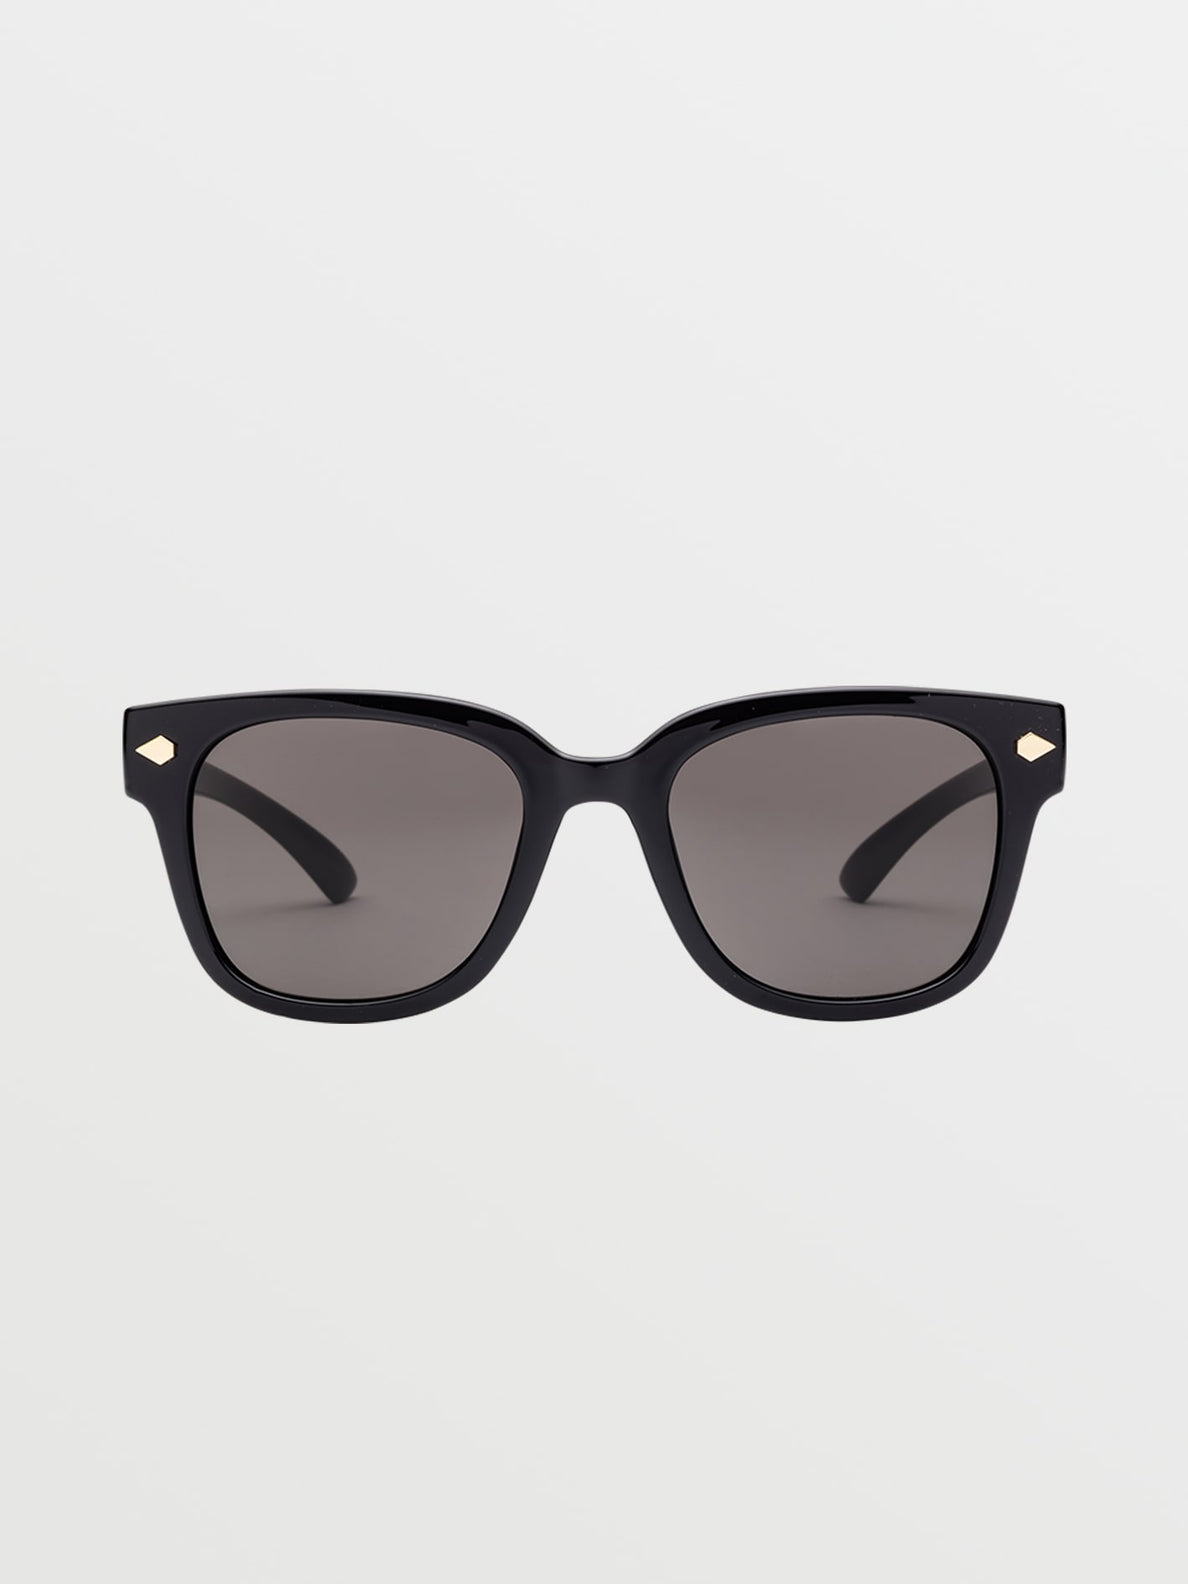 Freestyle Sunglasses - Gloss Black/Gray